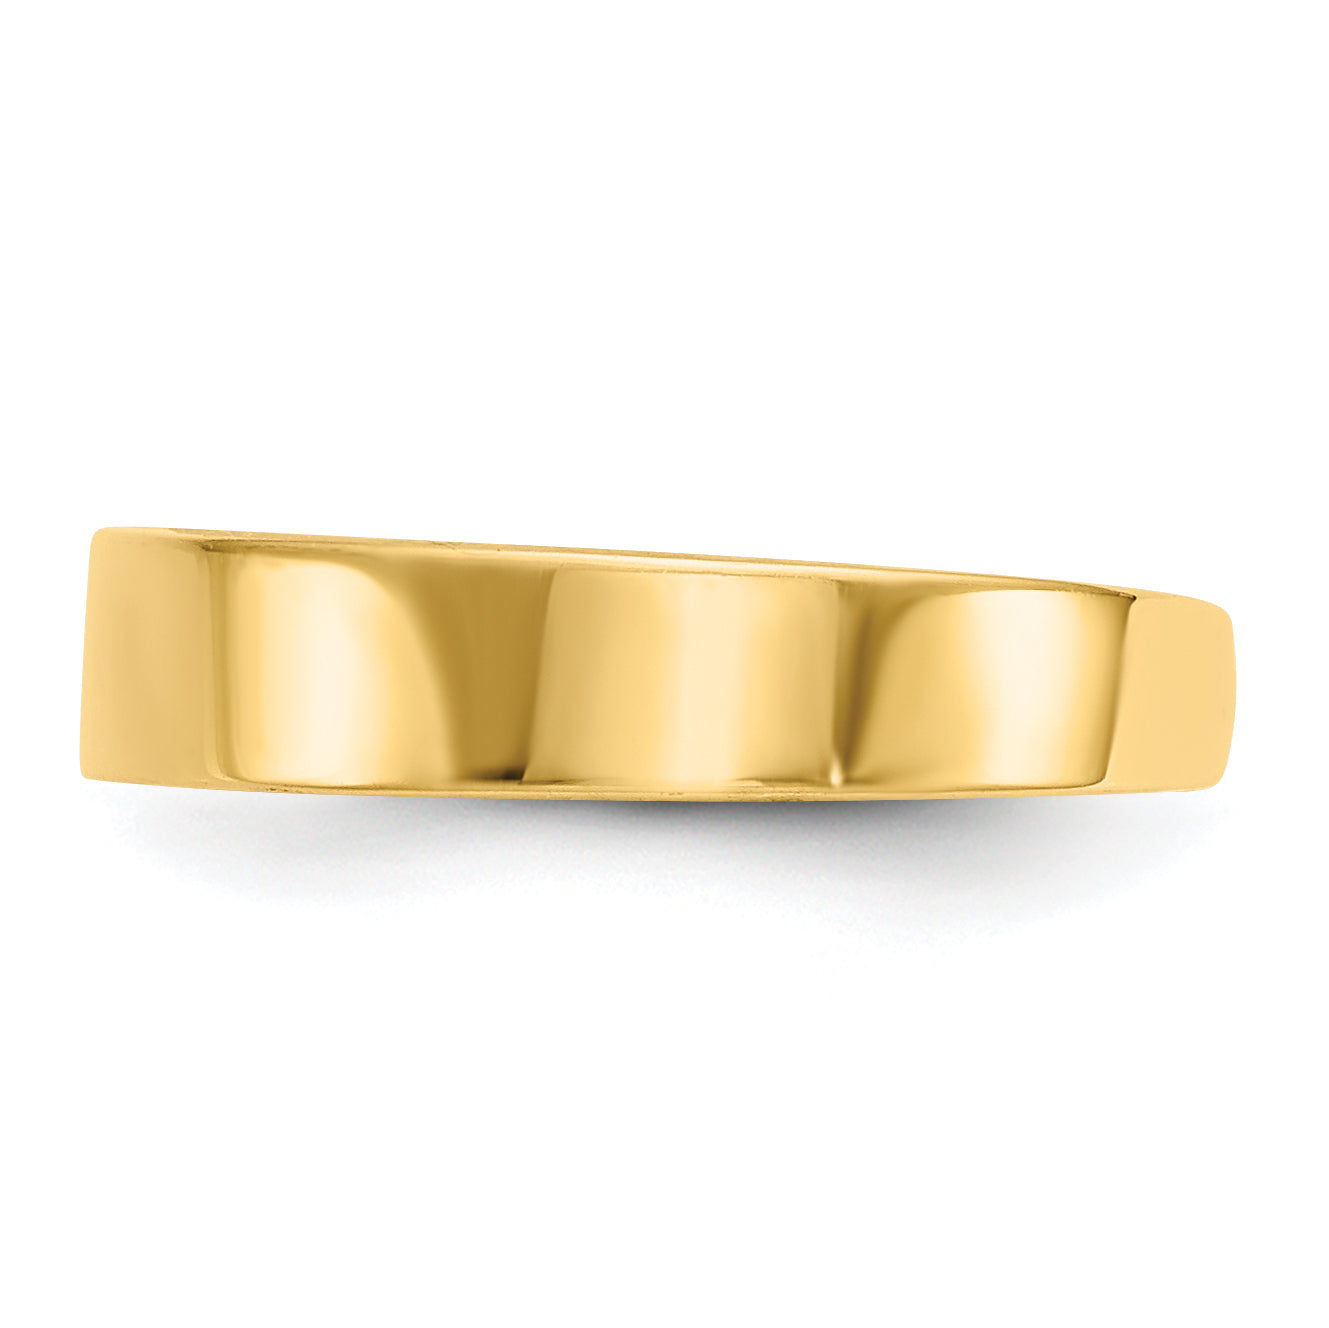 10K Adjustable Polished Band Toe Ring